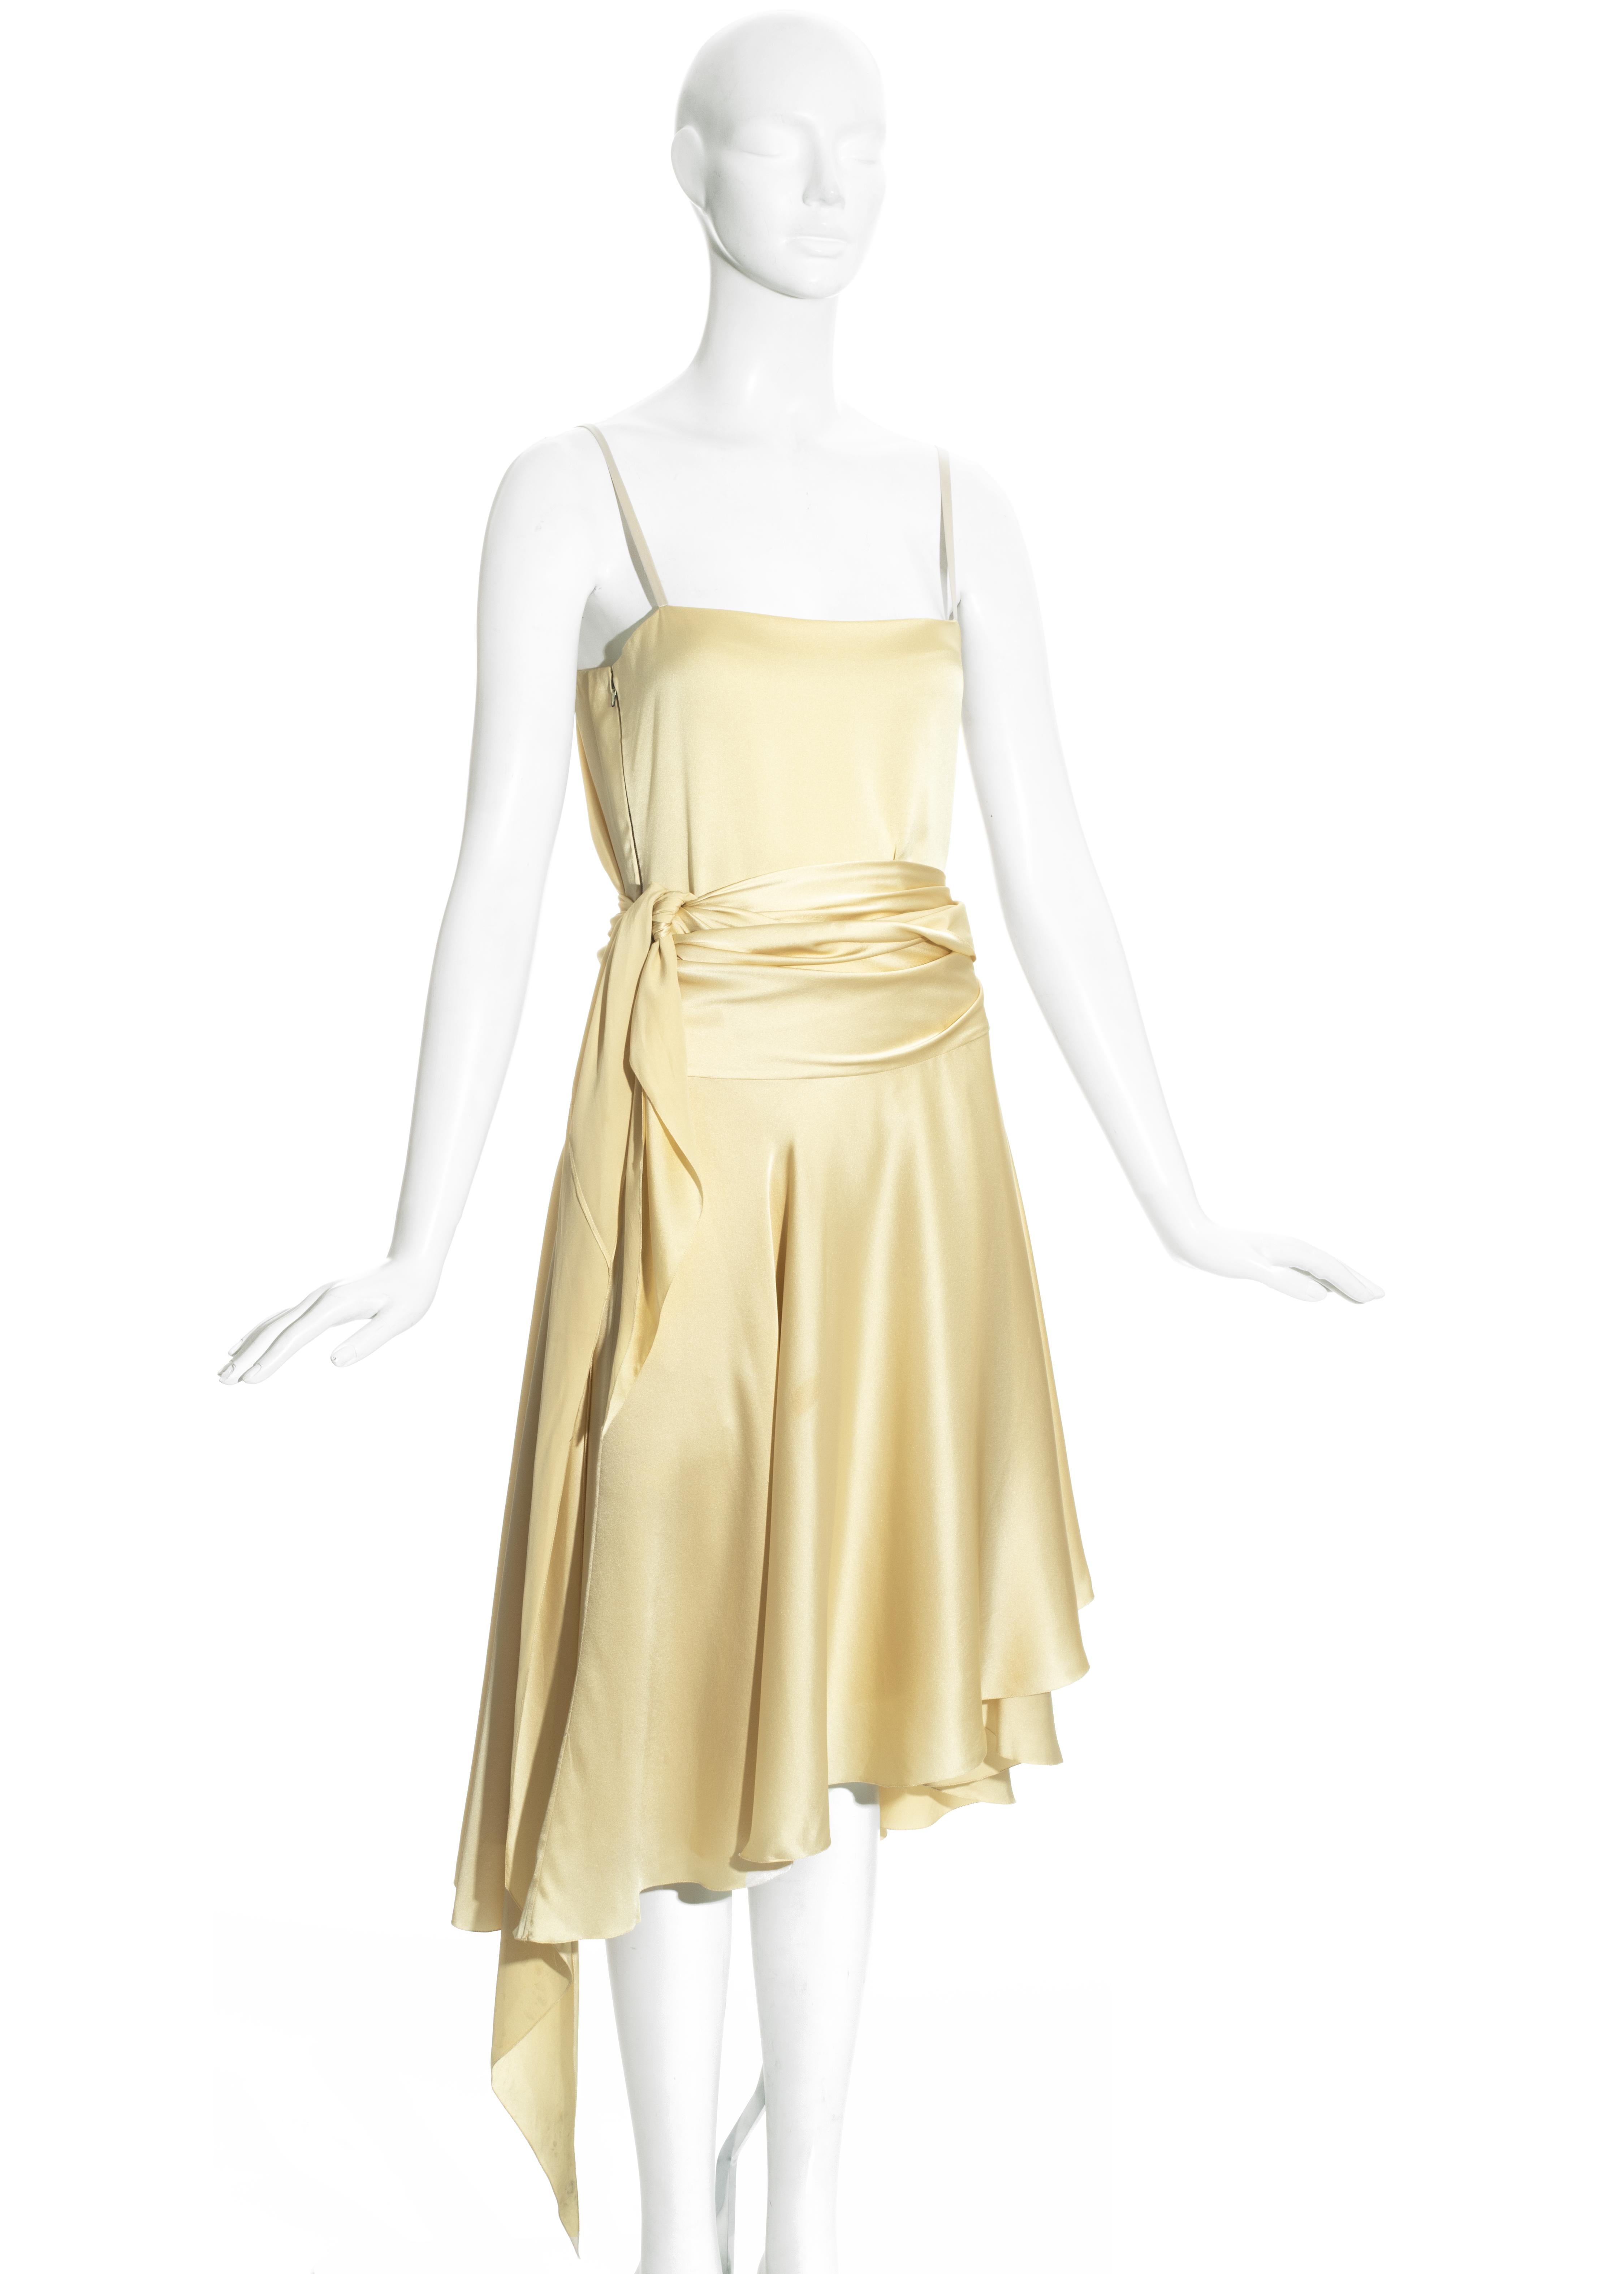 Christian Dior: Haute Couture by Marc Bohan cream silk two piece, slip dress and flounced wrap skirt.

Fall-Winter 1978